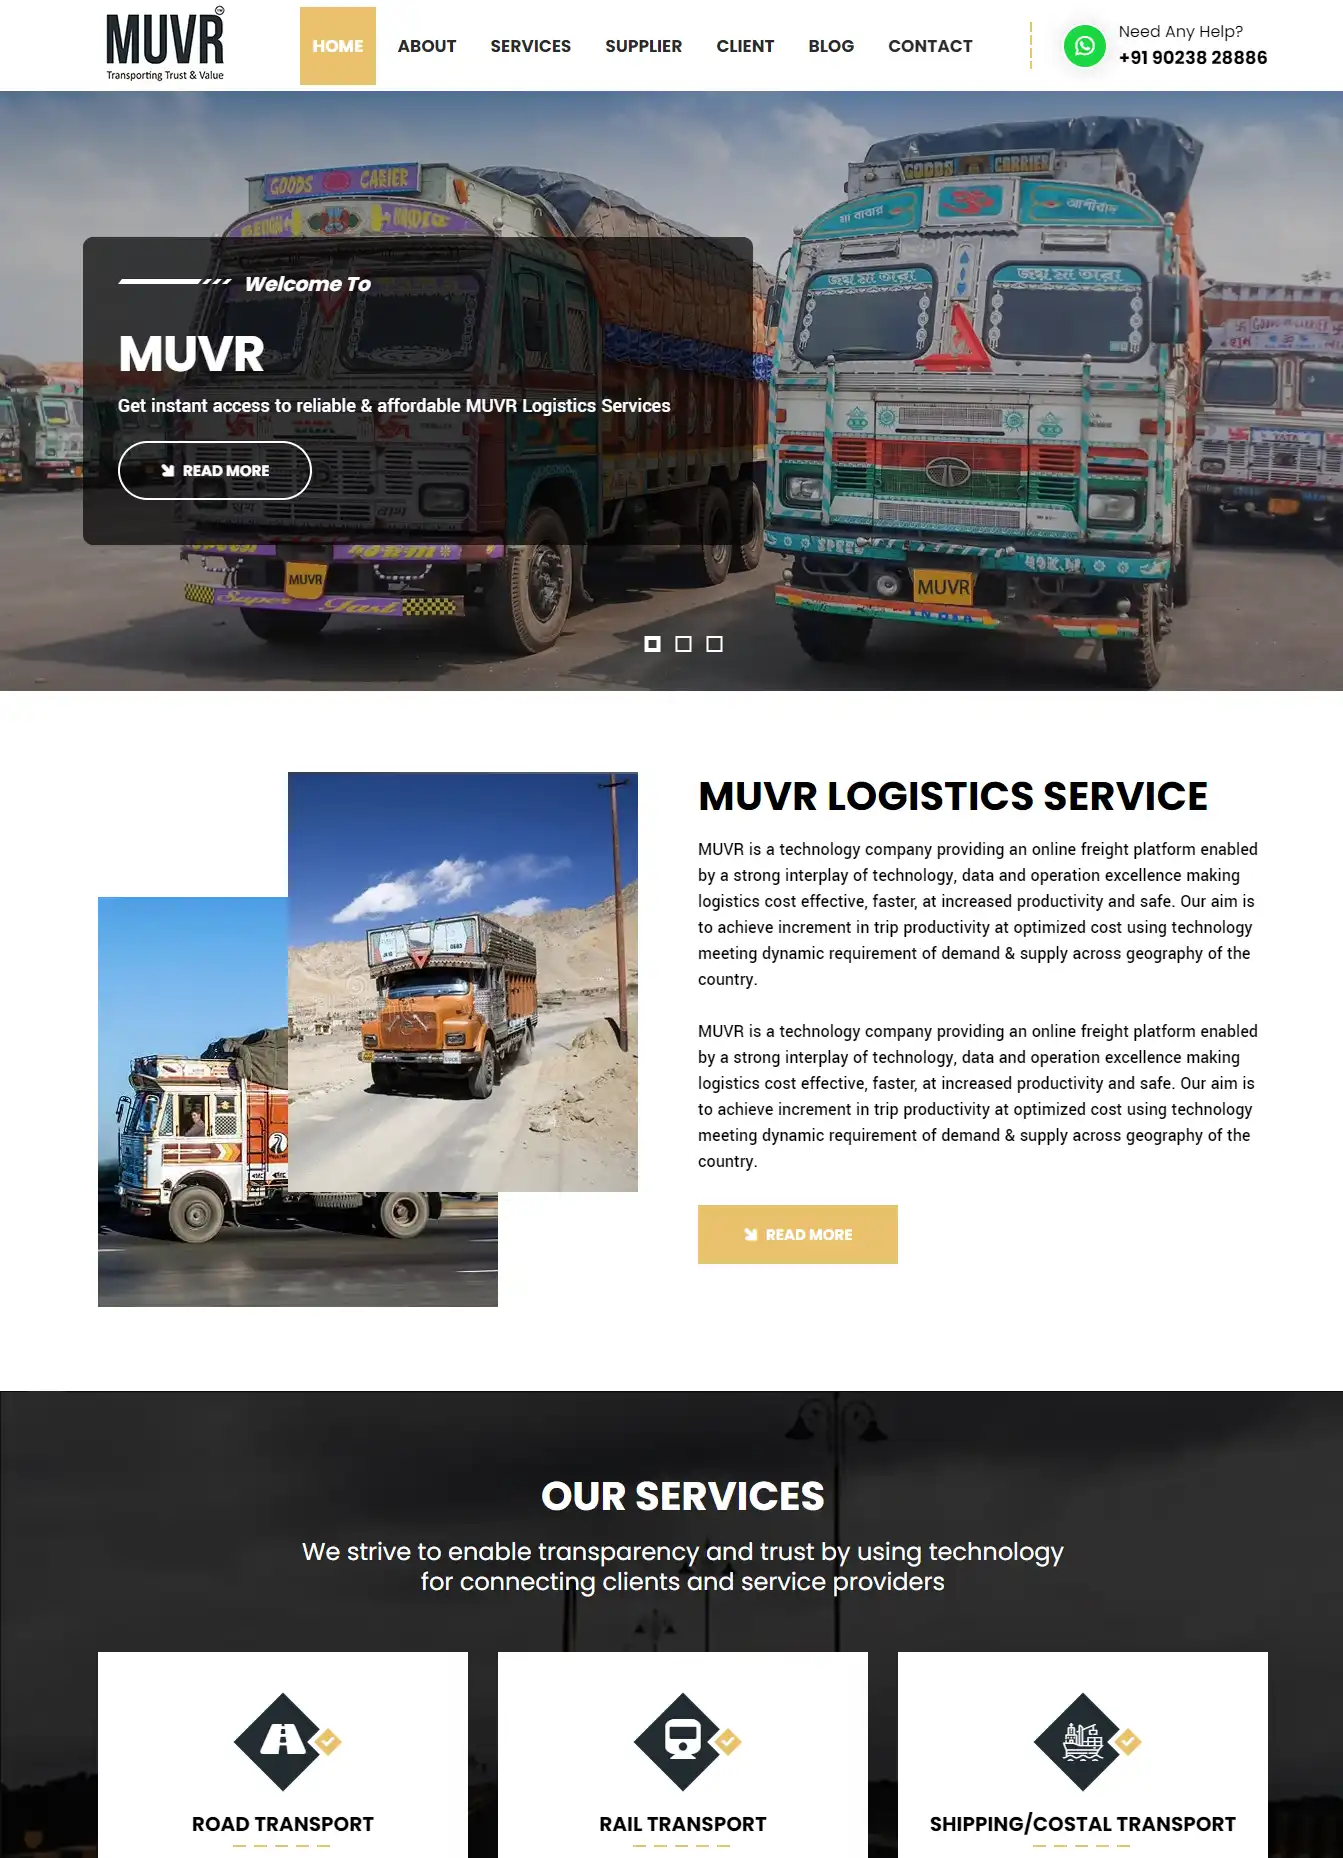 MUVR - Portfolio Website